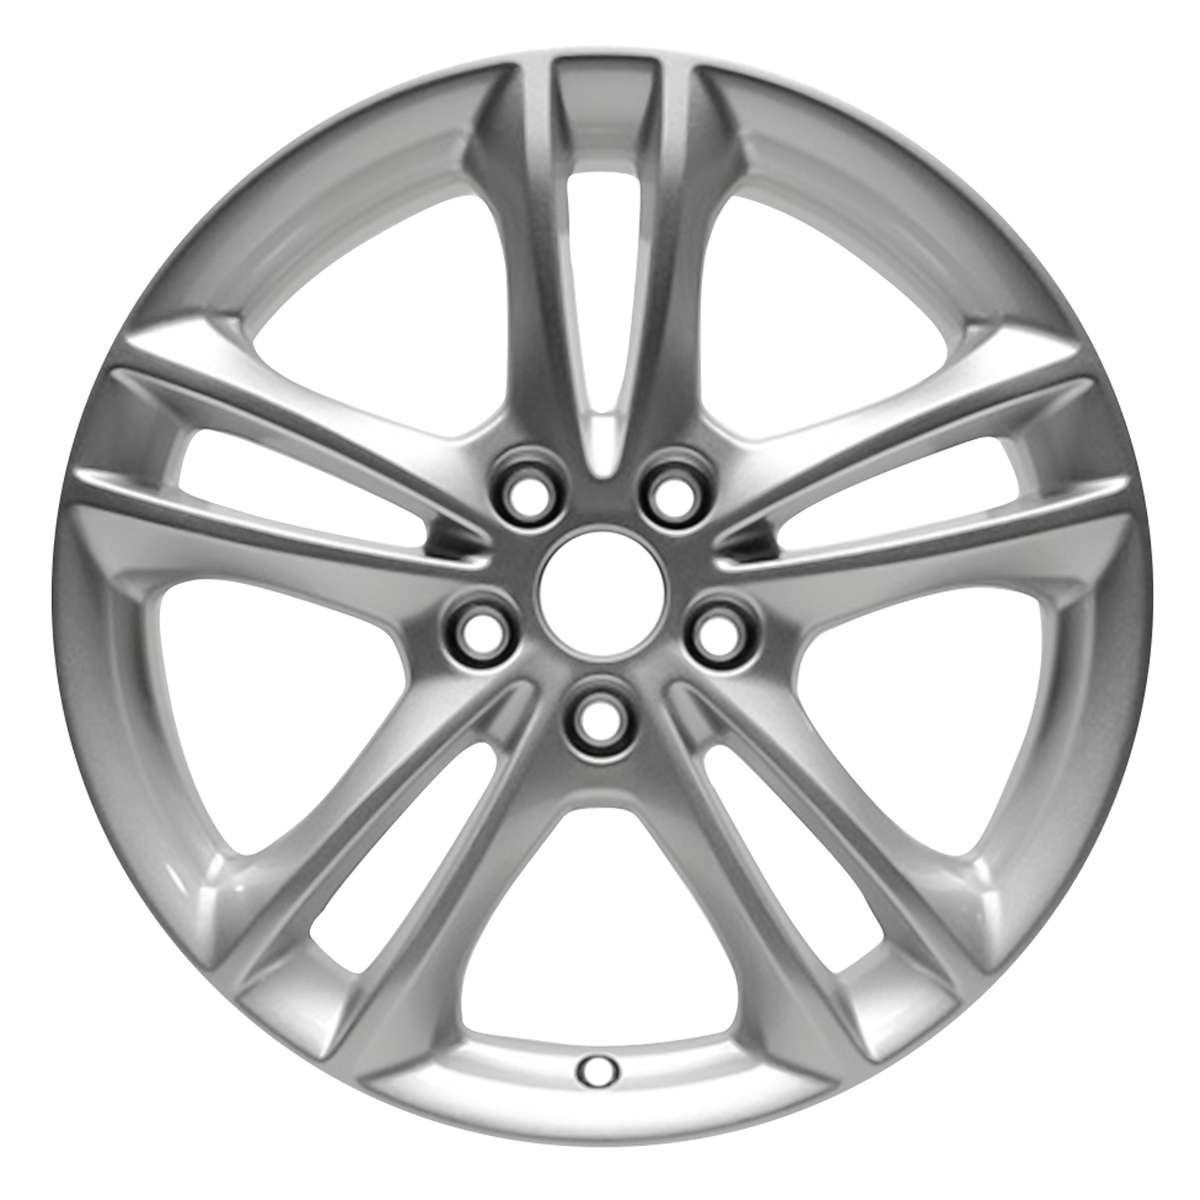 2017 Ford Fusion New 17" Replacement Wheel Rim RW3984SB